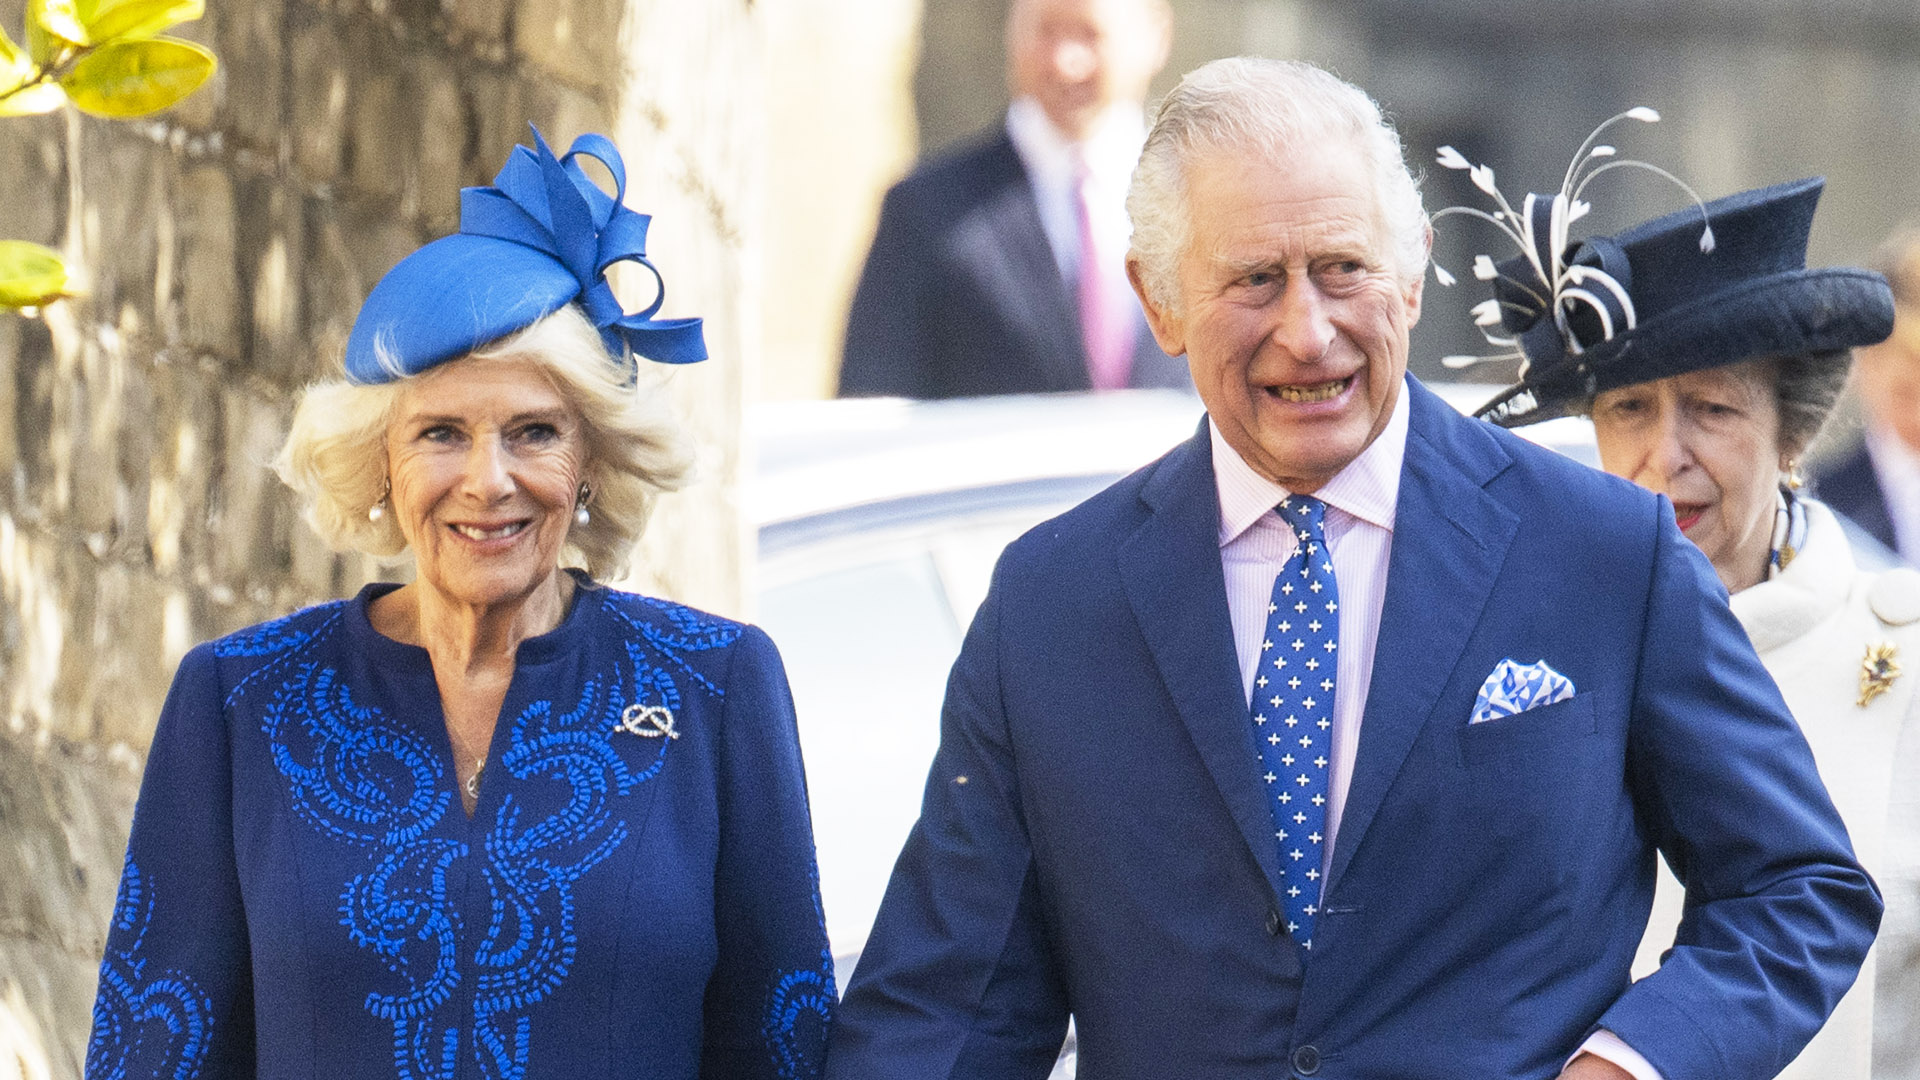 King Charles' Coronation Bill: The Eye-Popping Amount Revealed